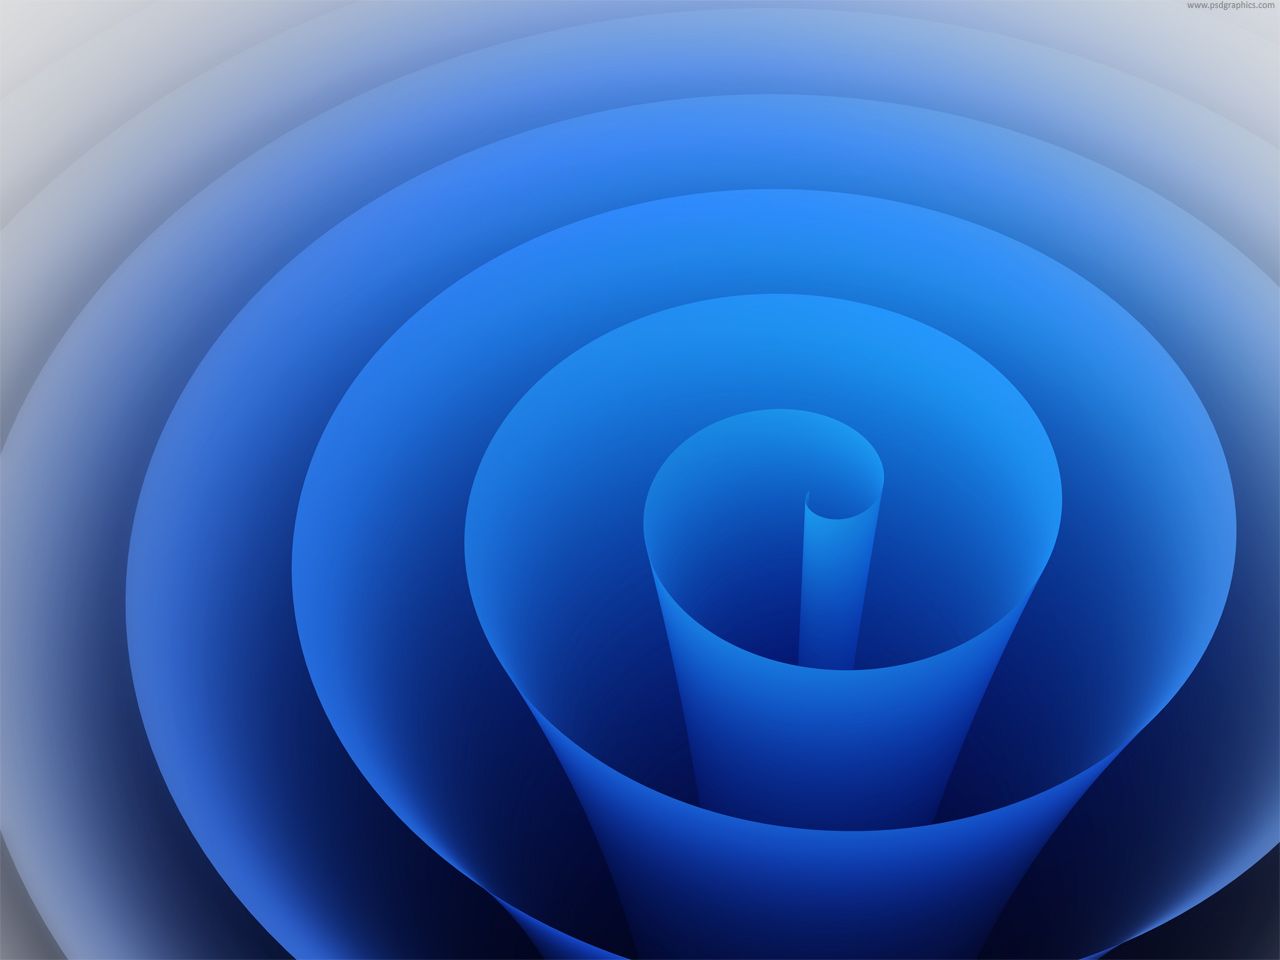 Blue swirl background | PSDGraphics